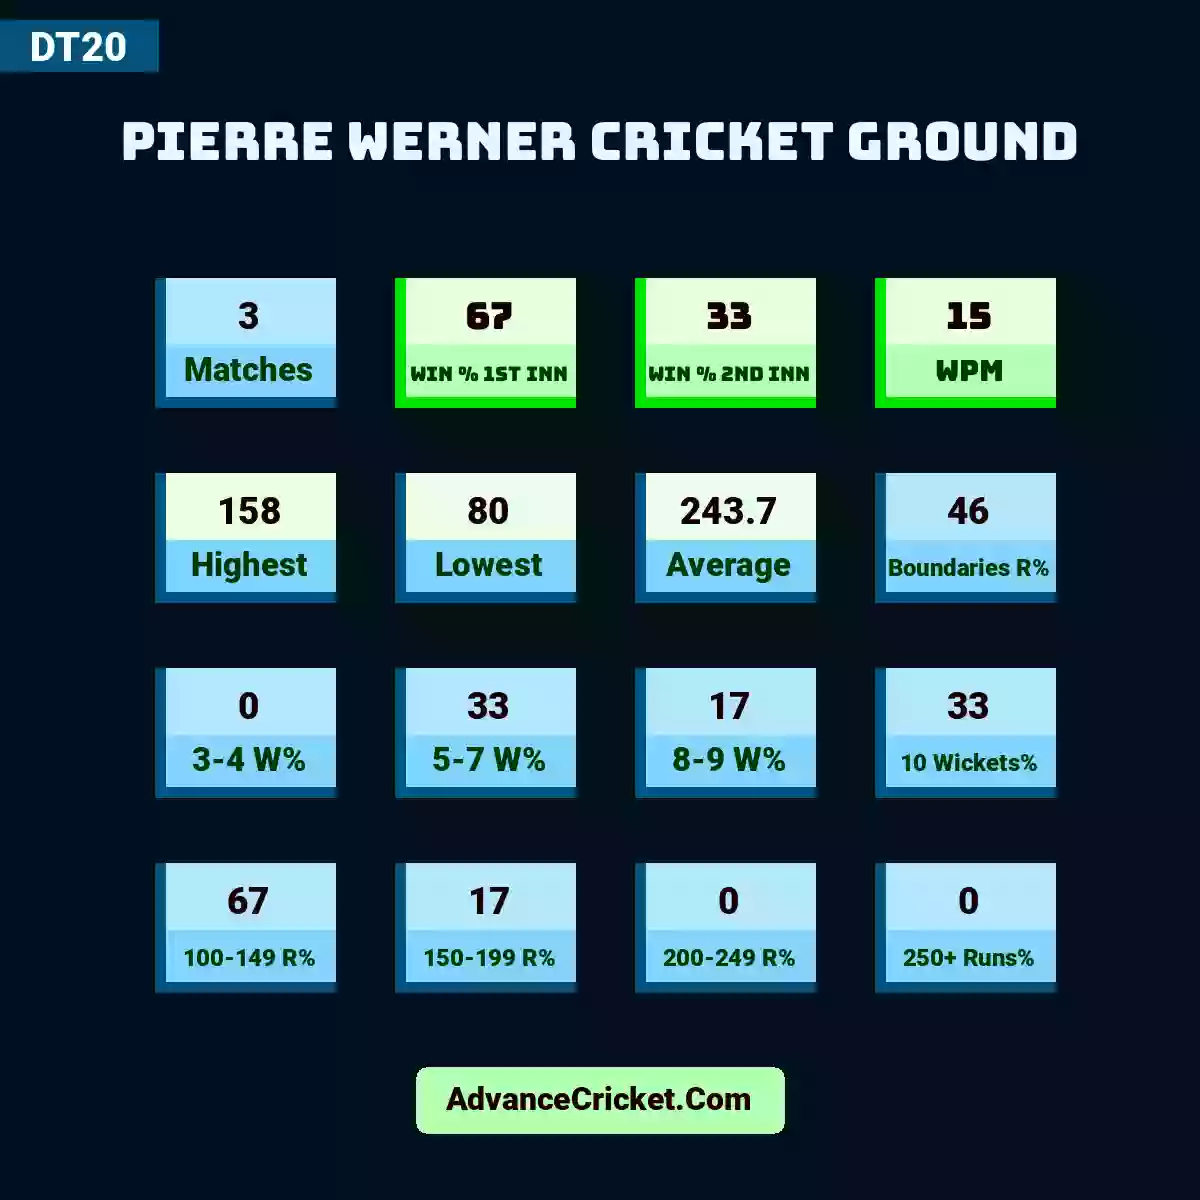 Image showing Pierre Werner Cricket Ground with Matches: 3, Win % 1st Inn: 67, Win % 2nd Inn: 33, WPM: 15, Highest: 158, Lowest: 80, Average: 243.7, Boundaries R%: 46, 3-4 W%: 0, 5-7 W%: 33, 8-9 W%: 17, 10 Wickets%: 33, 100-149 R%: 67, 150-199 R%: 17, 200-249 R%: 0, 250+ Runs%: 0.